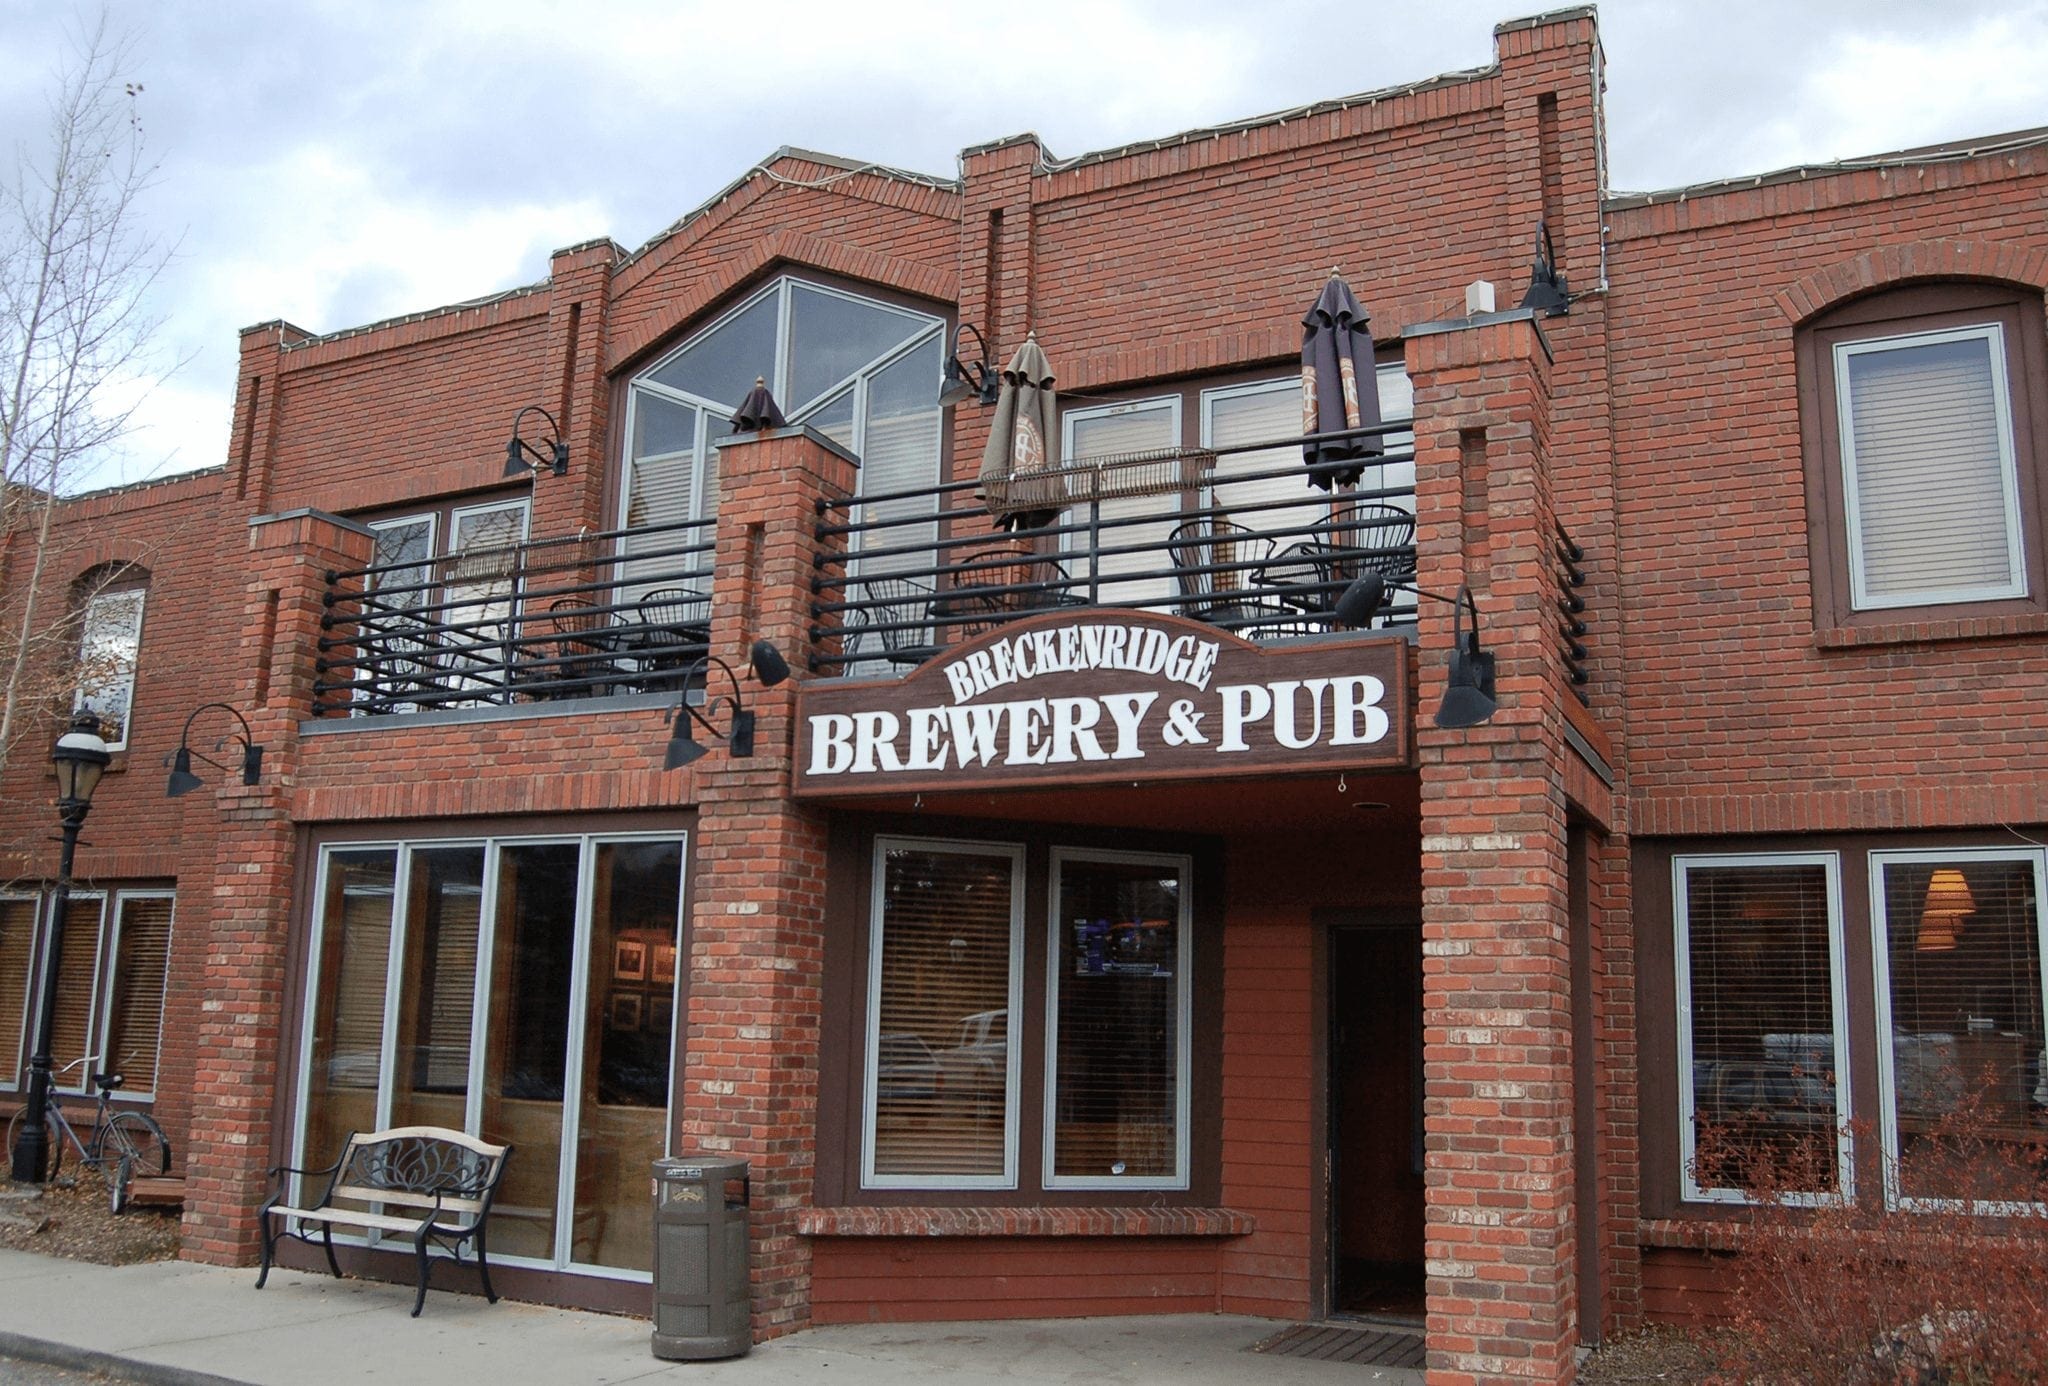 Breckenridge Brewery and Pub